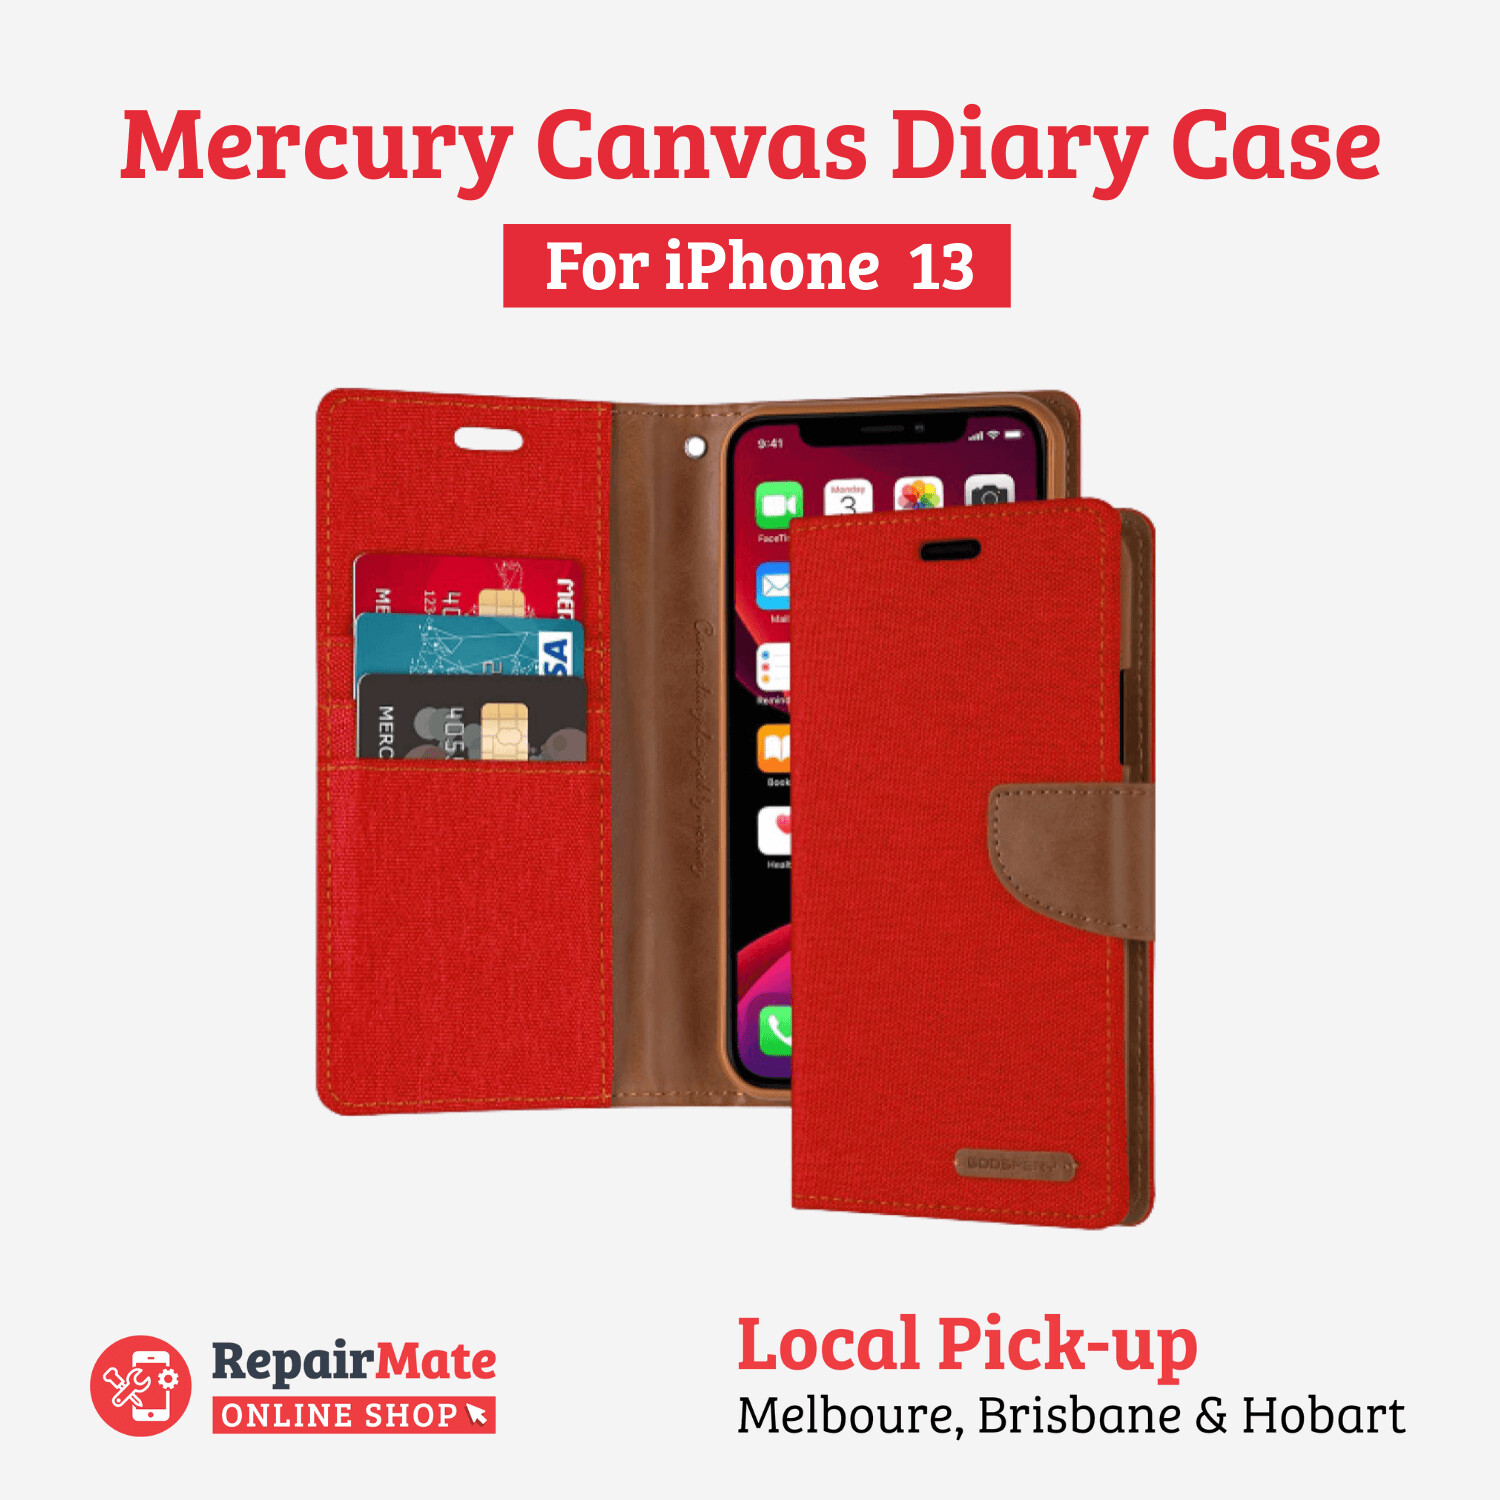 iPhone 13 Mercury Canvas Foldable Diary Case